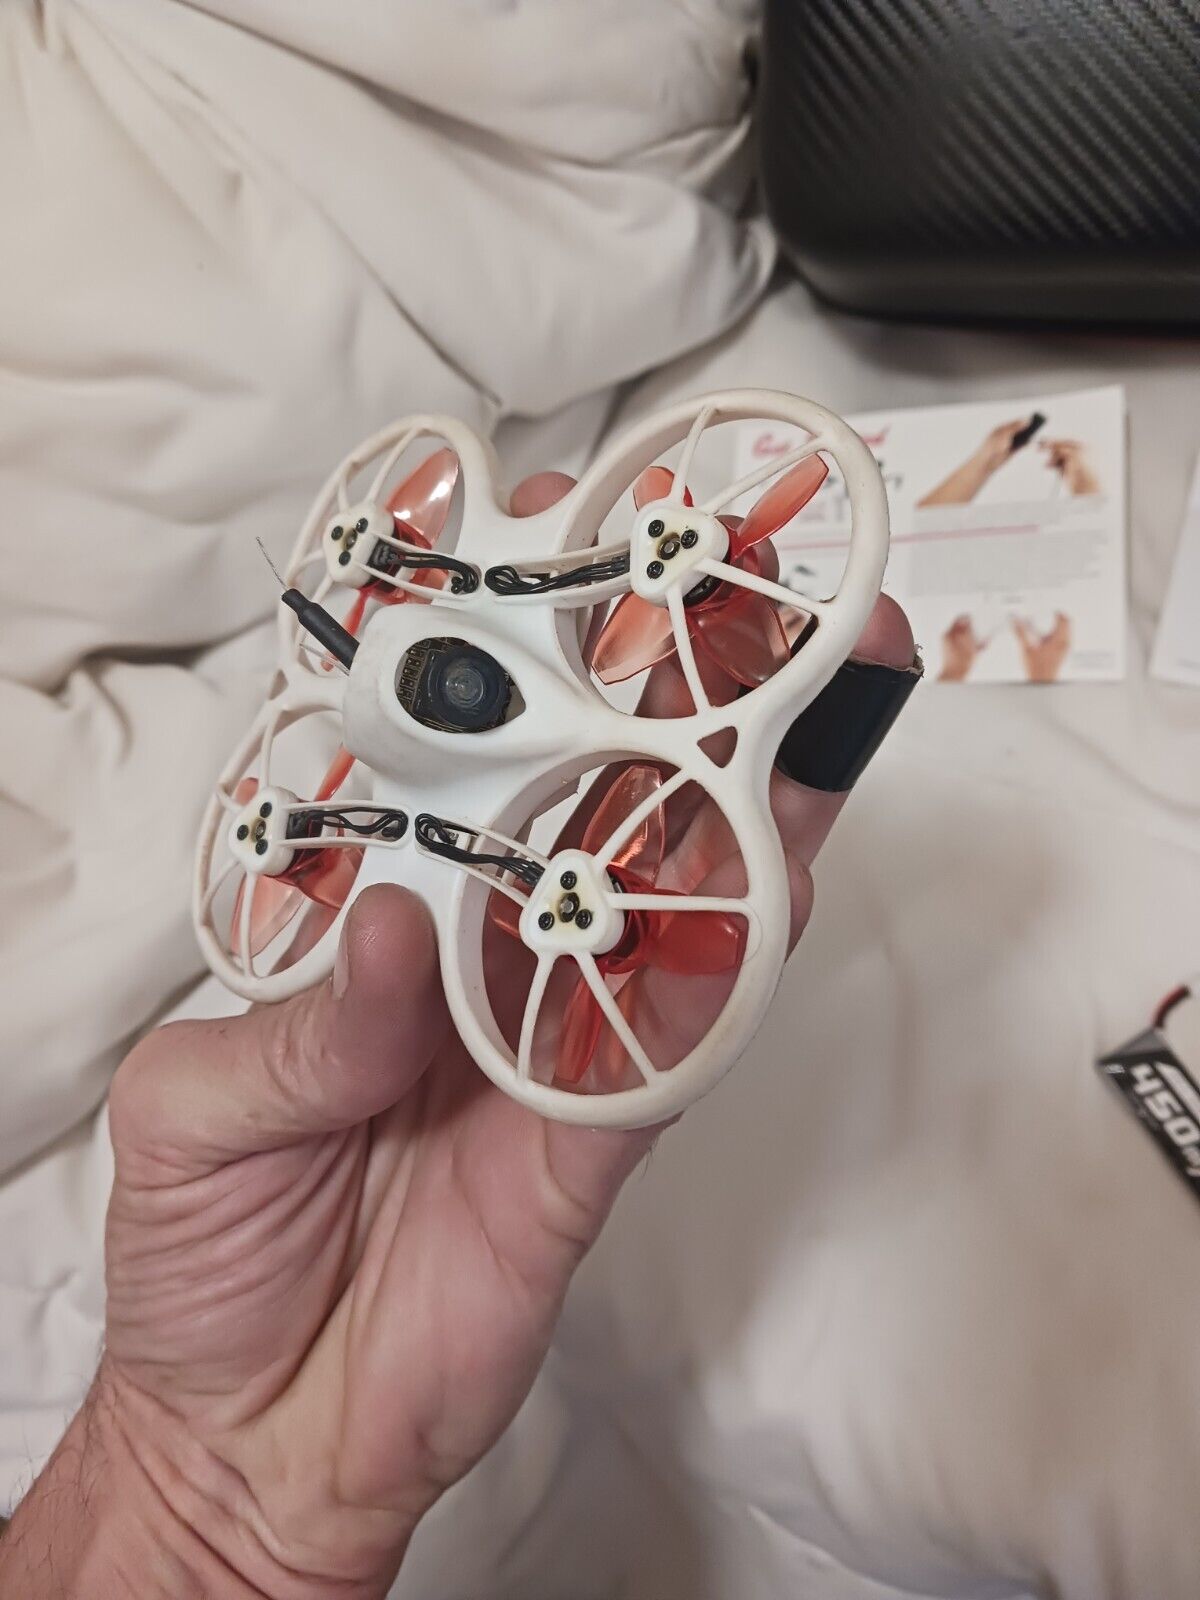 EMAX Tinyhawk RTF Racing Drone + Goggles